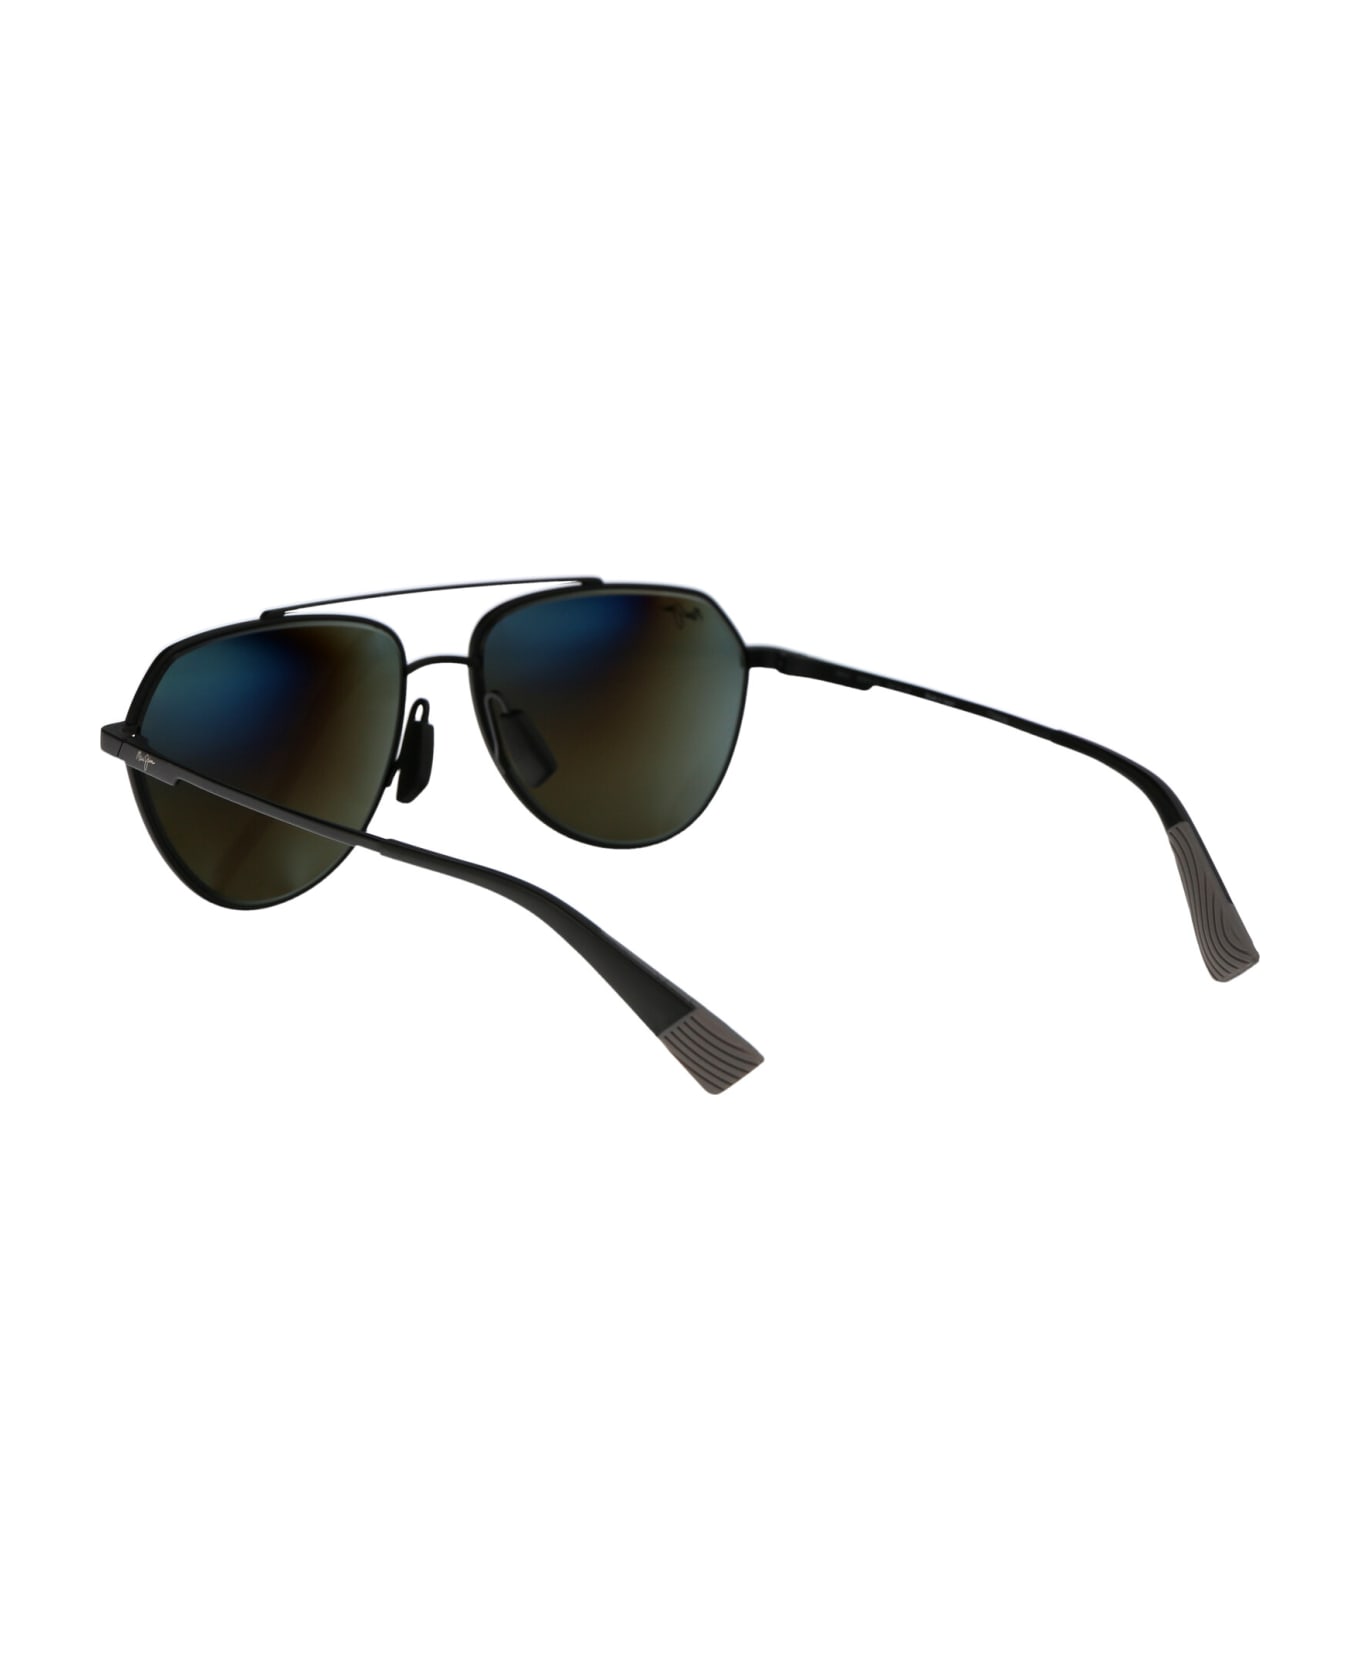 Maui Jim Waiwai Sunglasses - 02 GREY WAIWAI MATTE BLACK W/ GREY サングラス